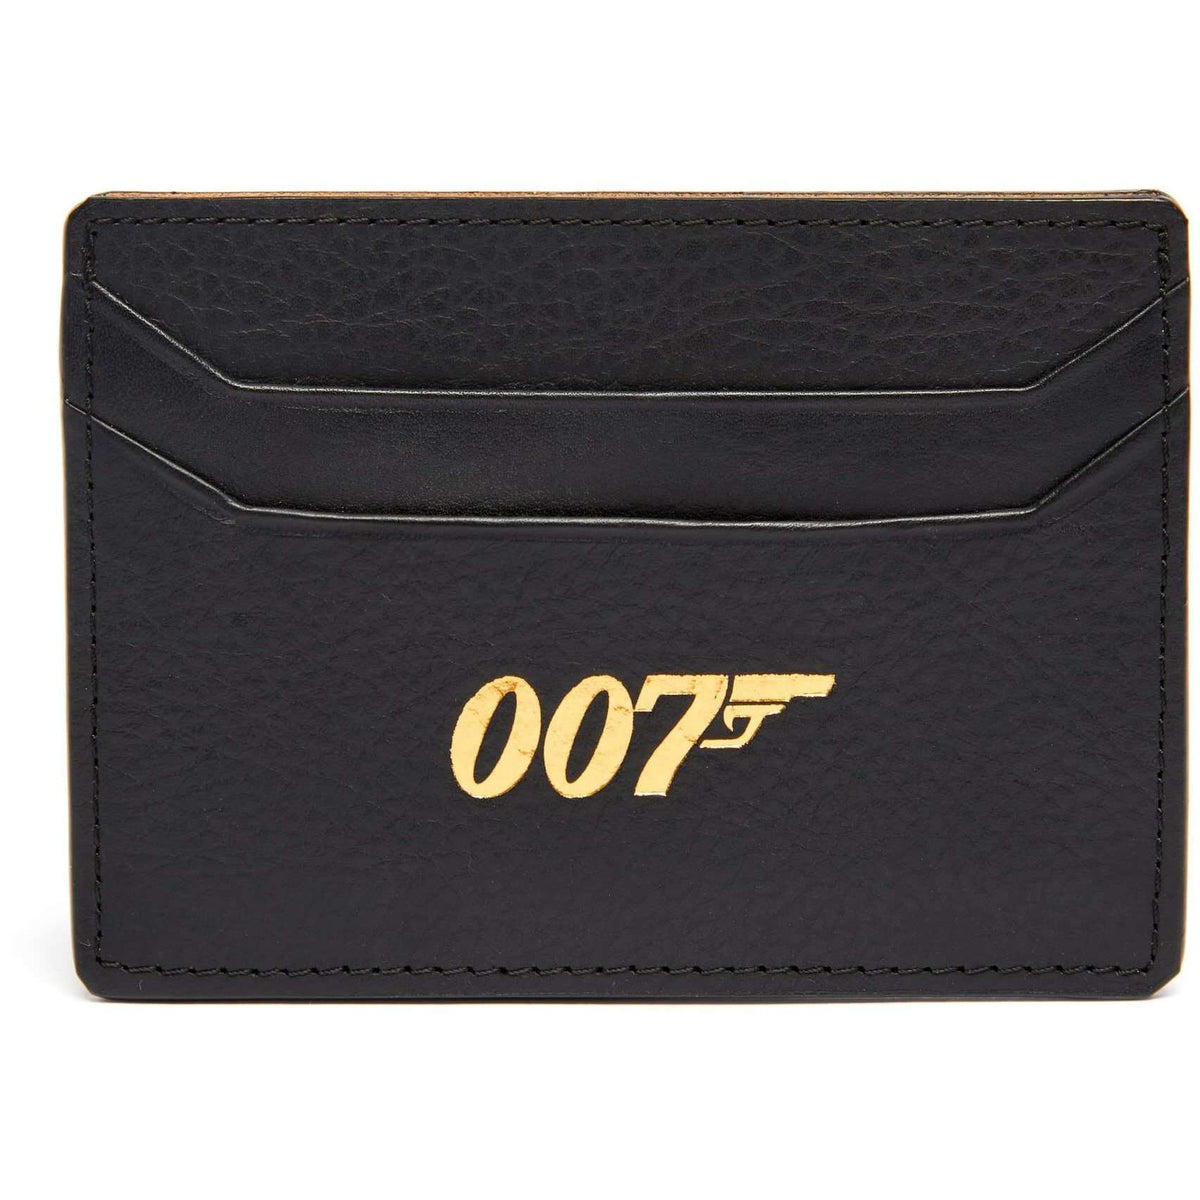 007 Personalised Pebble-grain Leather Card Holder in Black WALLET Plinth 